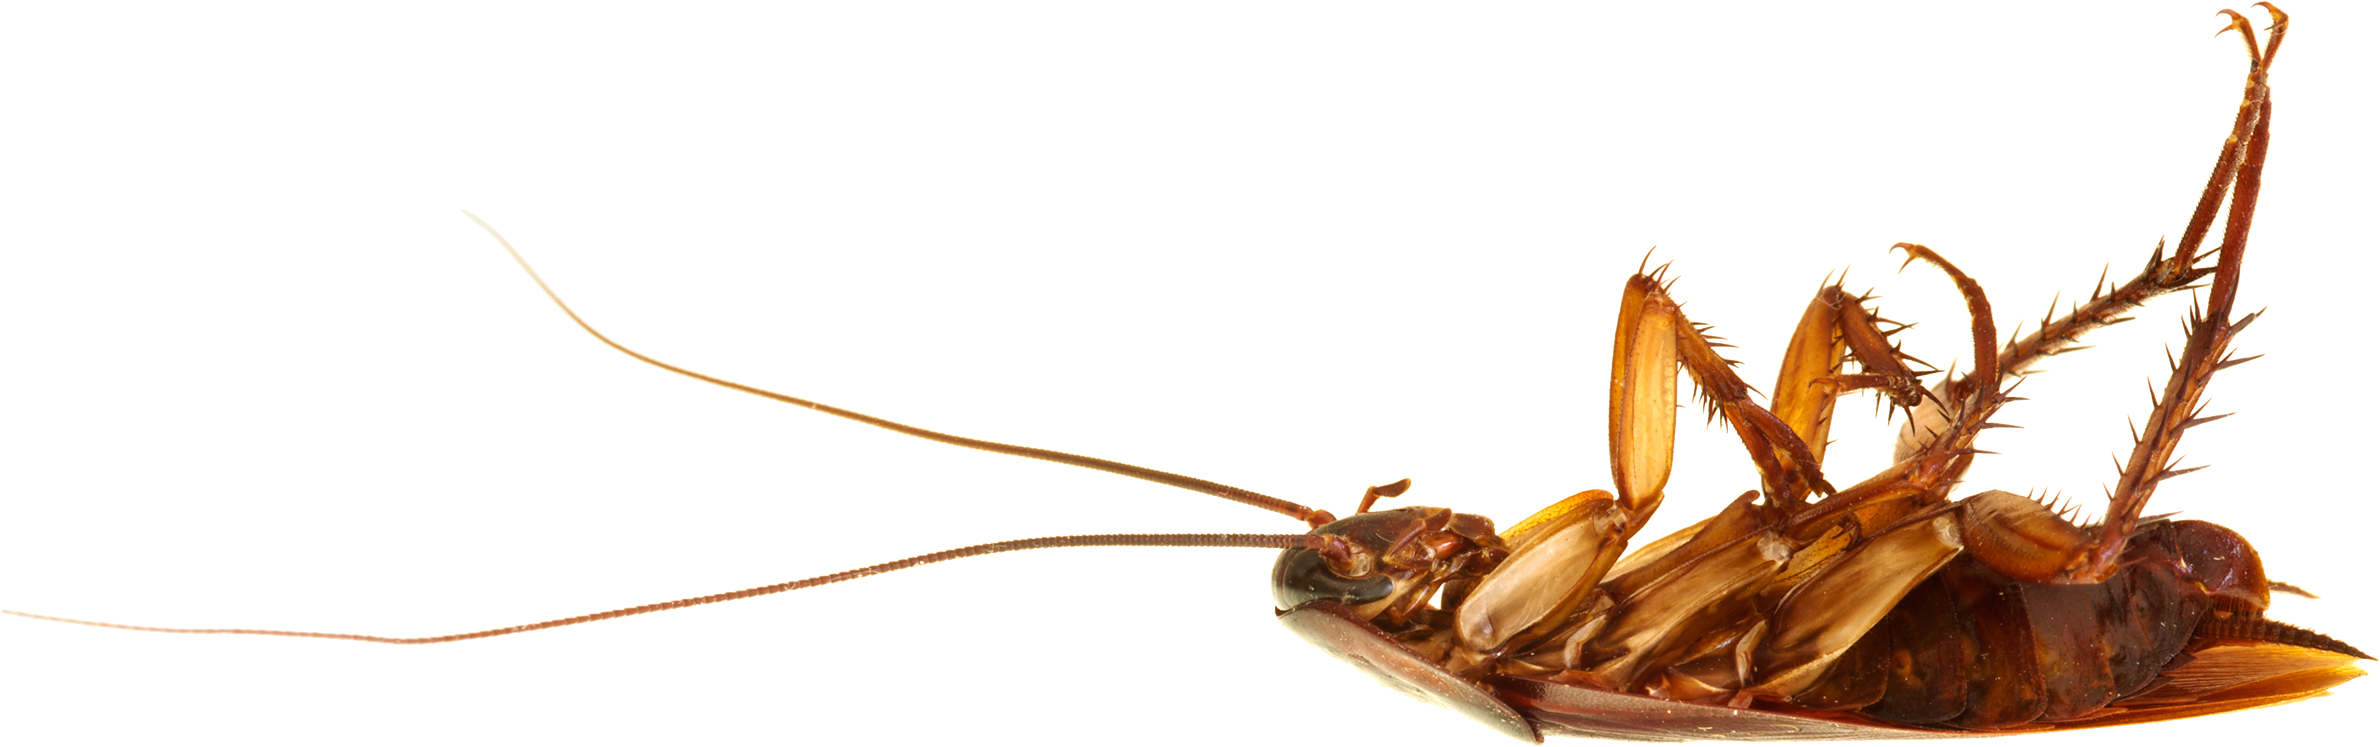 Roach PNG-Afbeelding met Transparante achtergrond